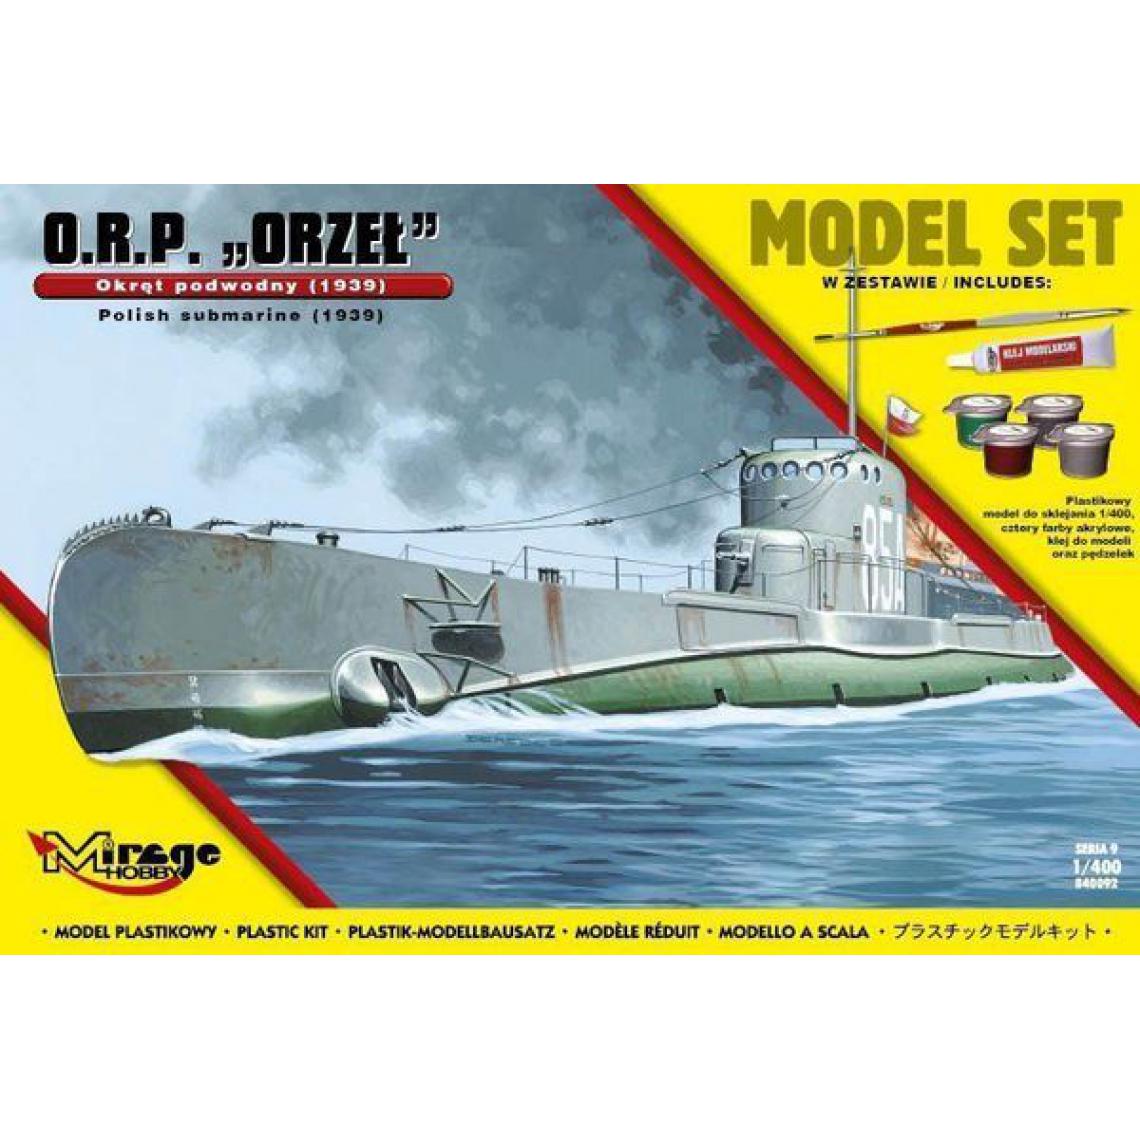 Mirage Hobby - ORP"Orzel"(Polish Submarine1939)ModelSet - 1:400e - Mirage Hobby - Accessoires et pièces